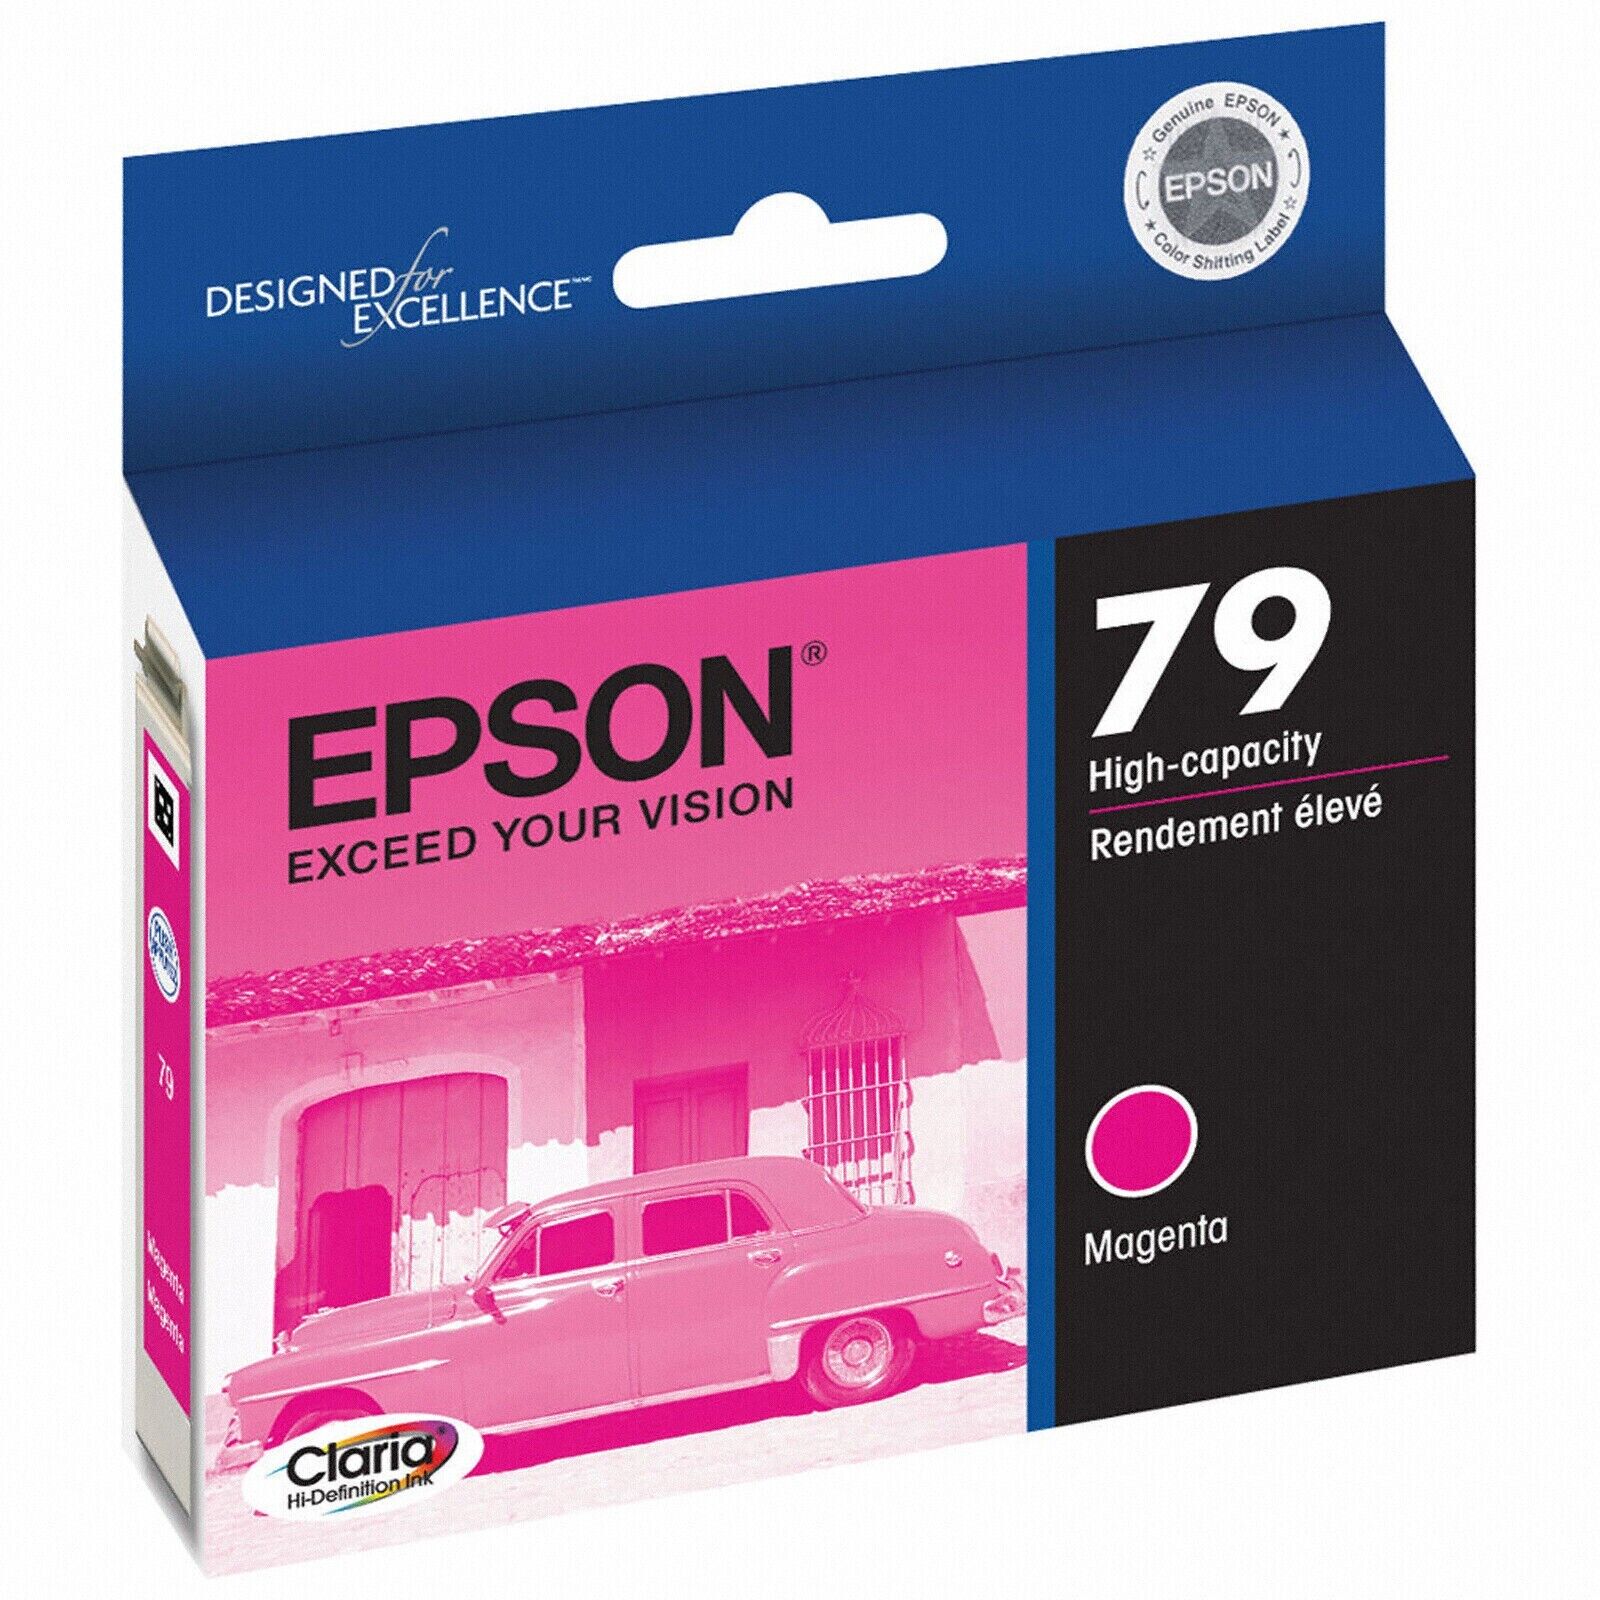 NEW Genuine OEM Epson 79 Magenta High-Capacity Inkjet Cartridge T0793, T079320